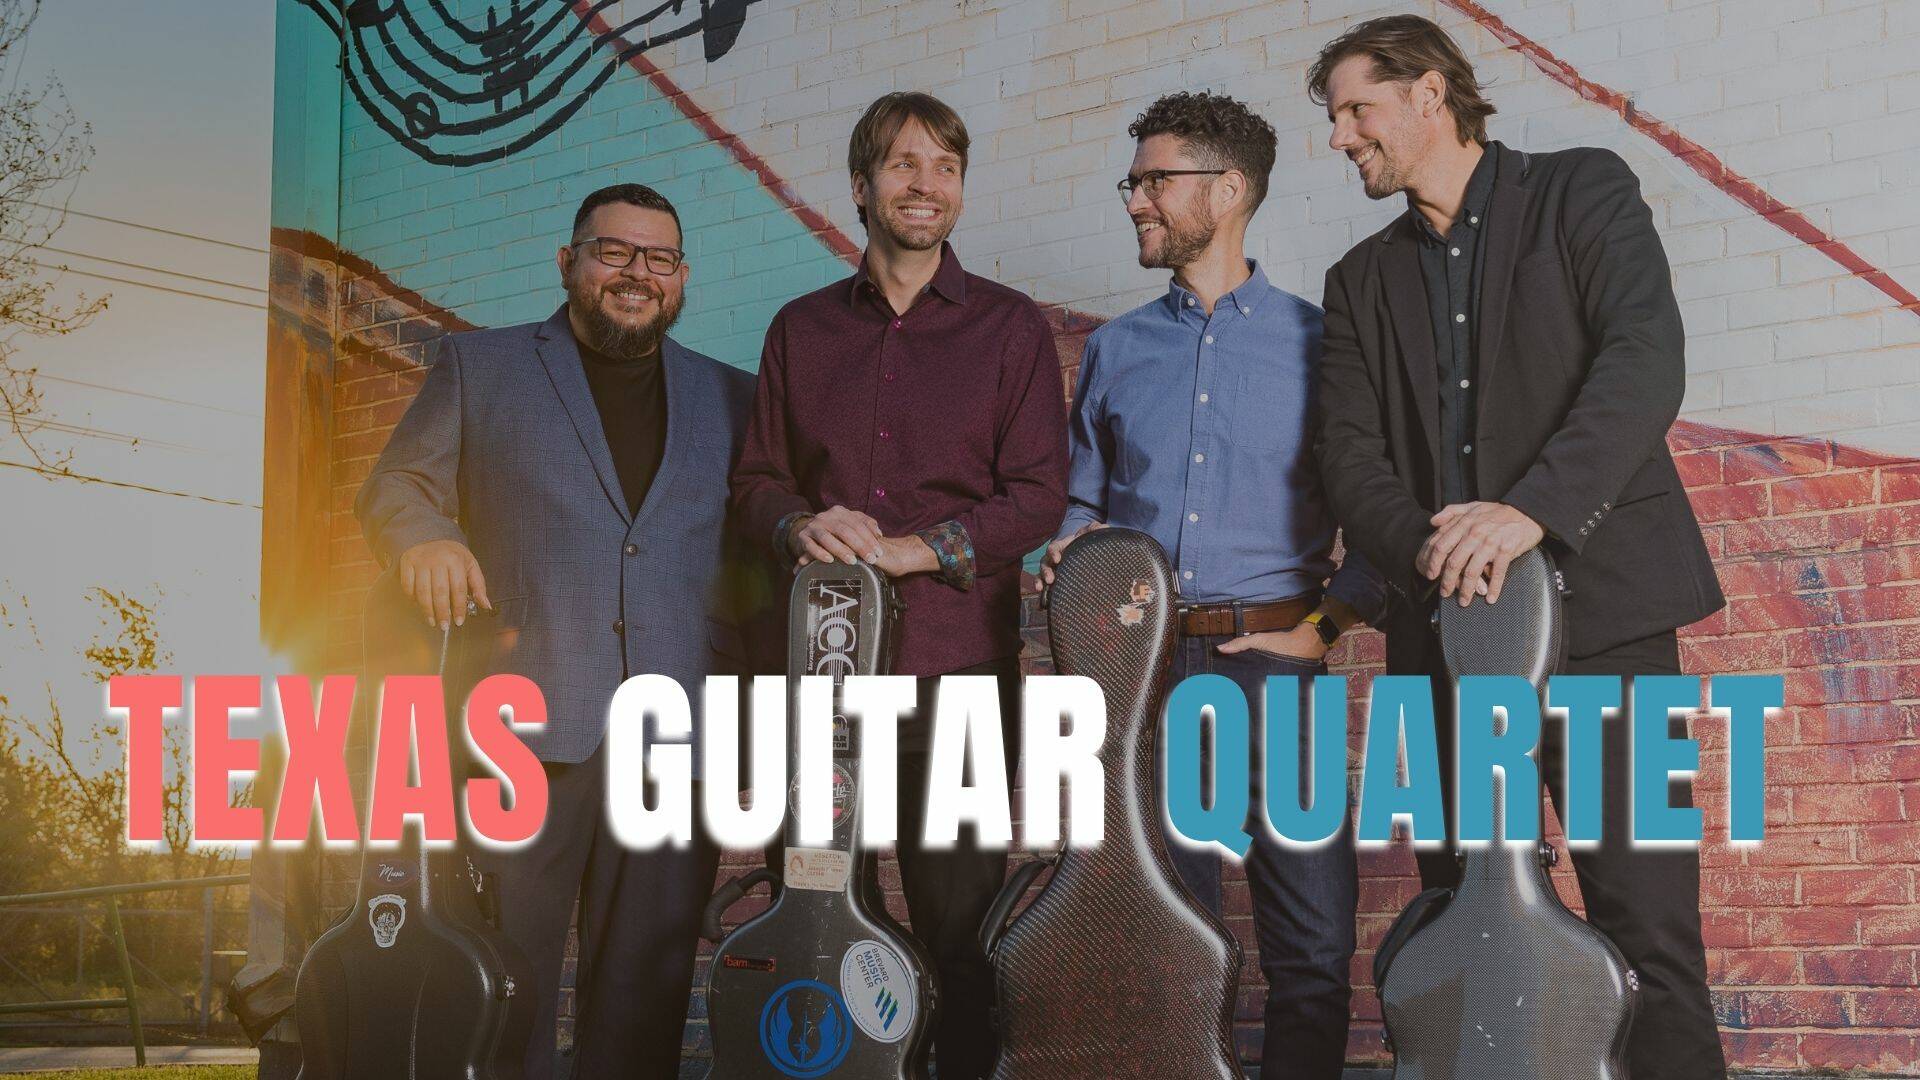 Texas Guitar Quartet comes to Orcas Center on Feb. 3
Contributed photo